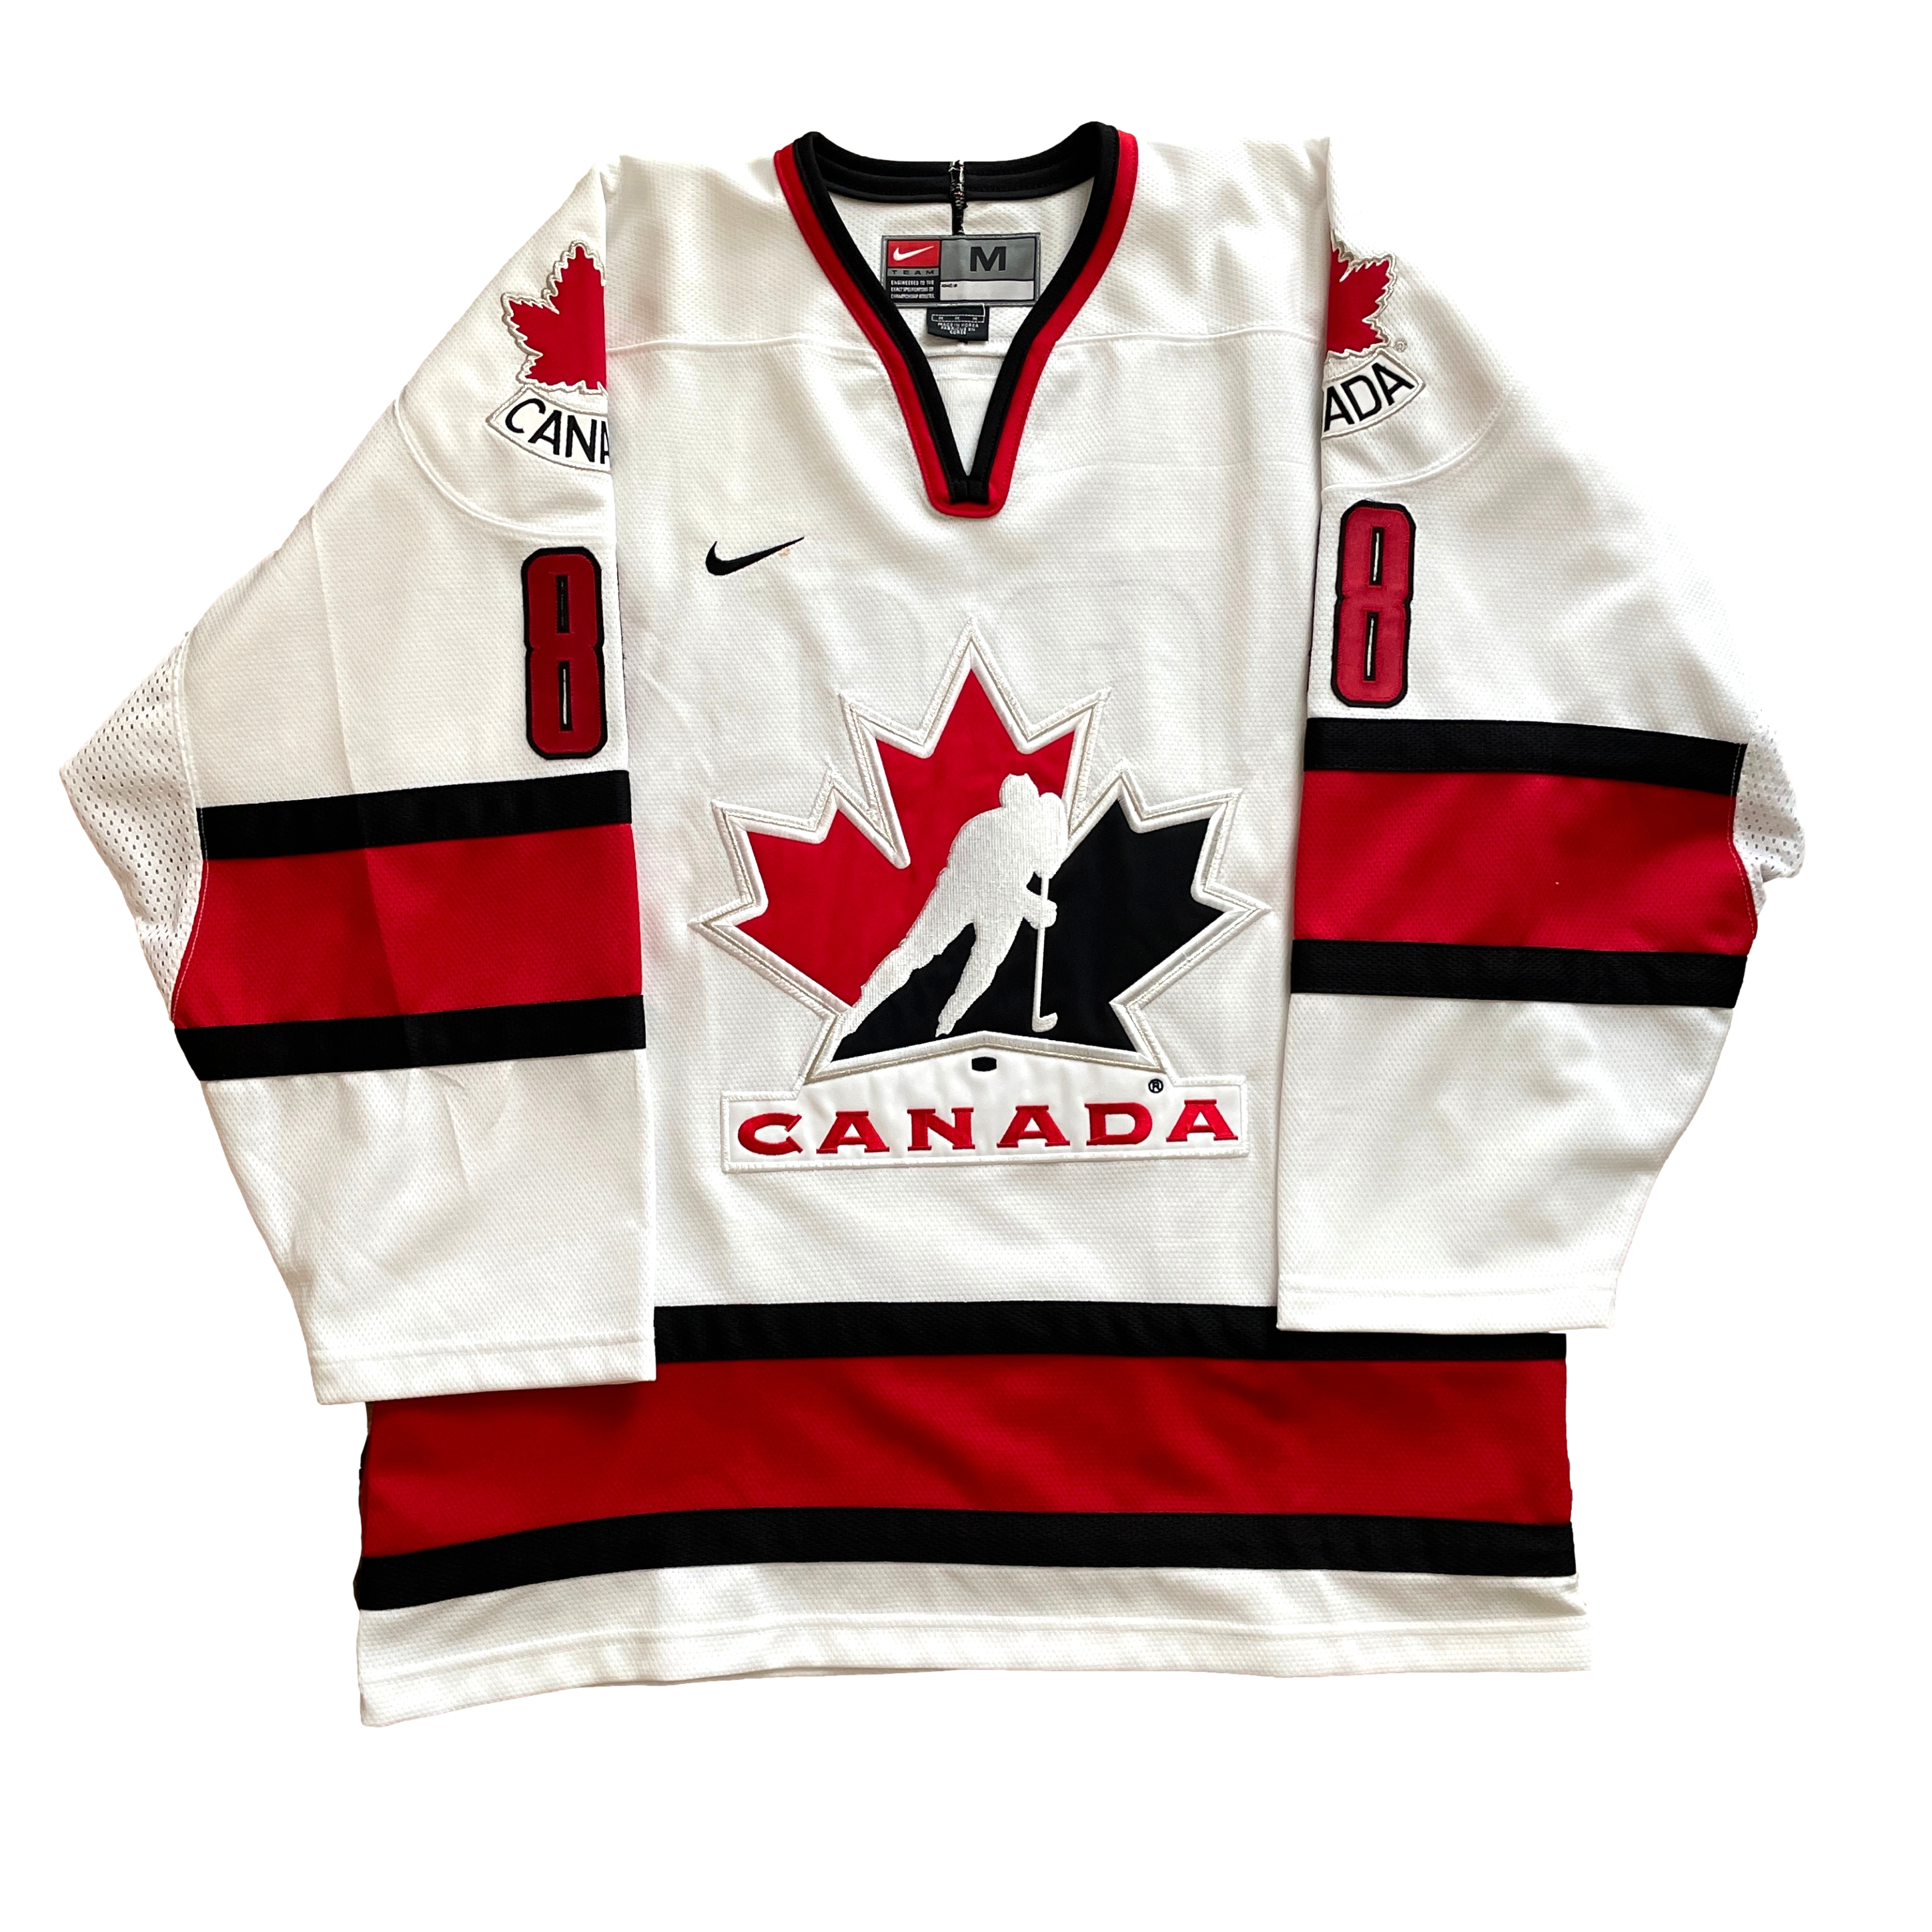 Vintage Nike Canada IIHF Hockey Jersey (M)